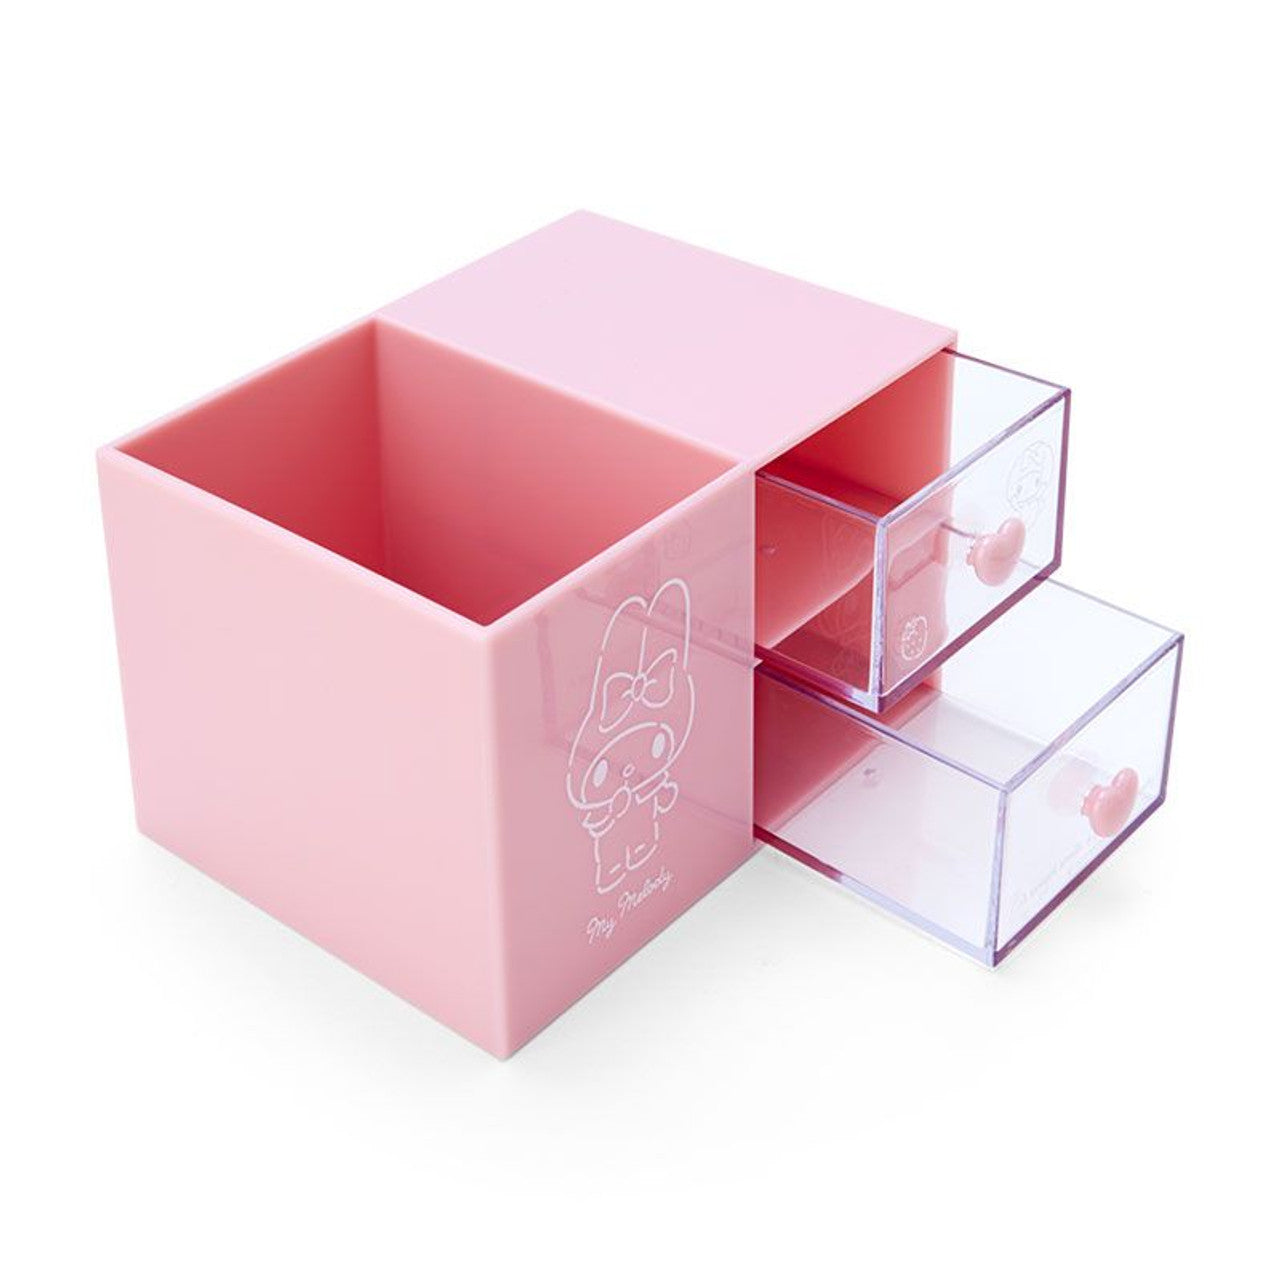 Sanrio Accessory Box with Pen Stand (Calm Color) - My melody (504793)